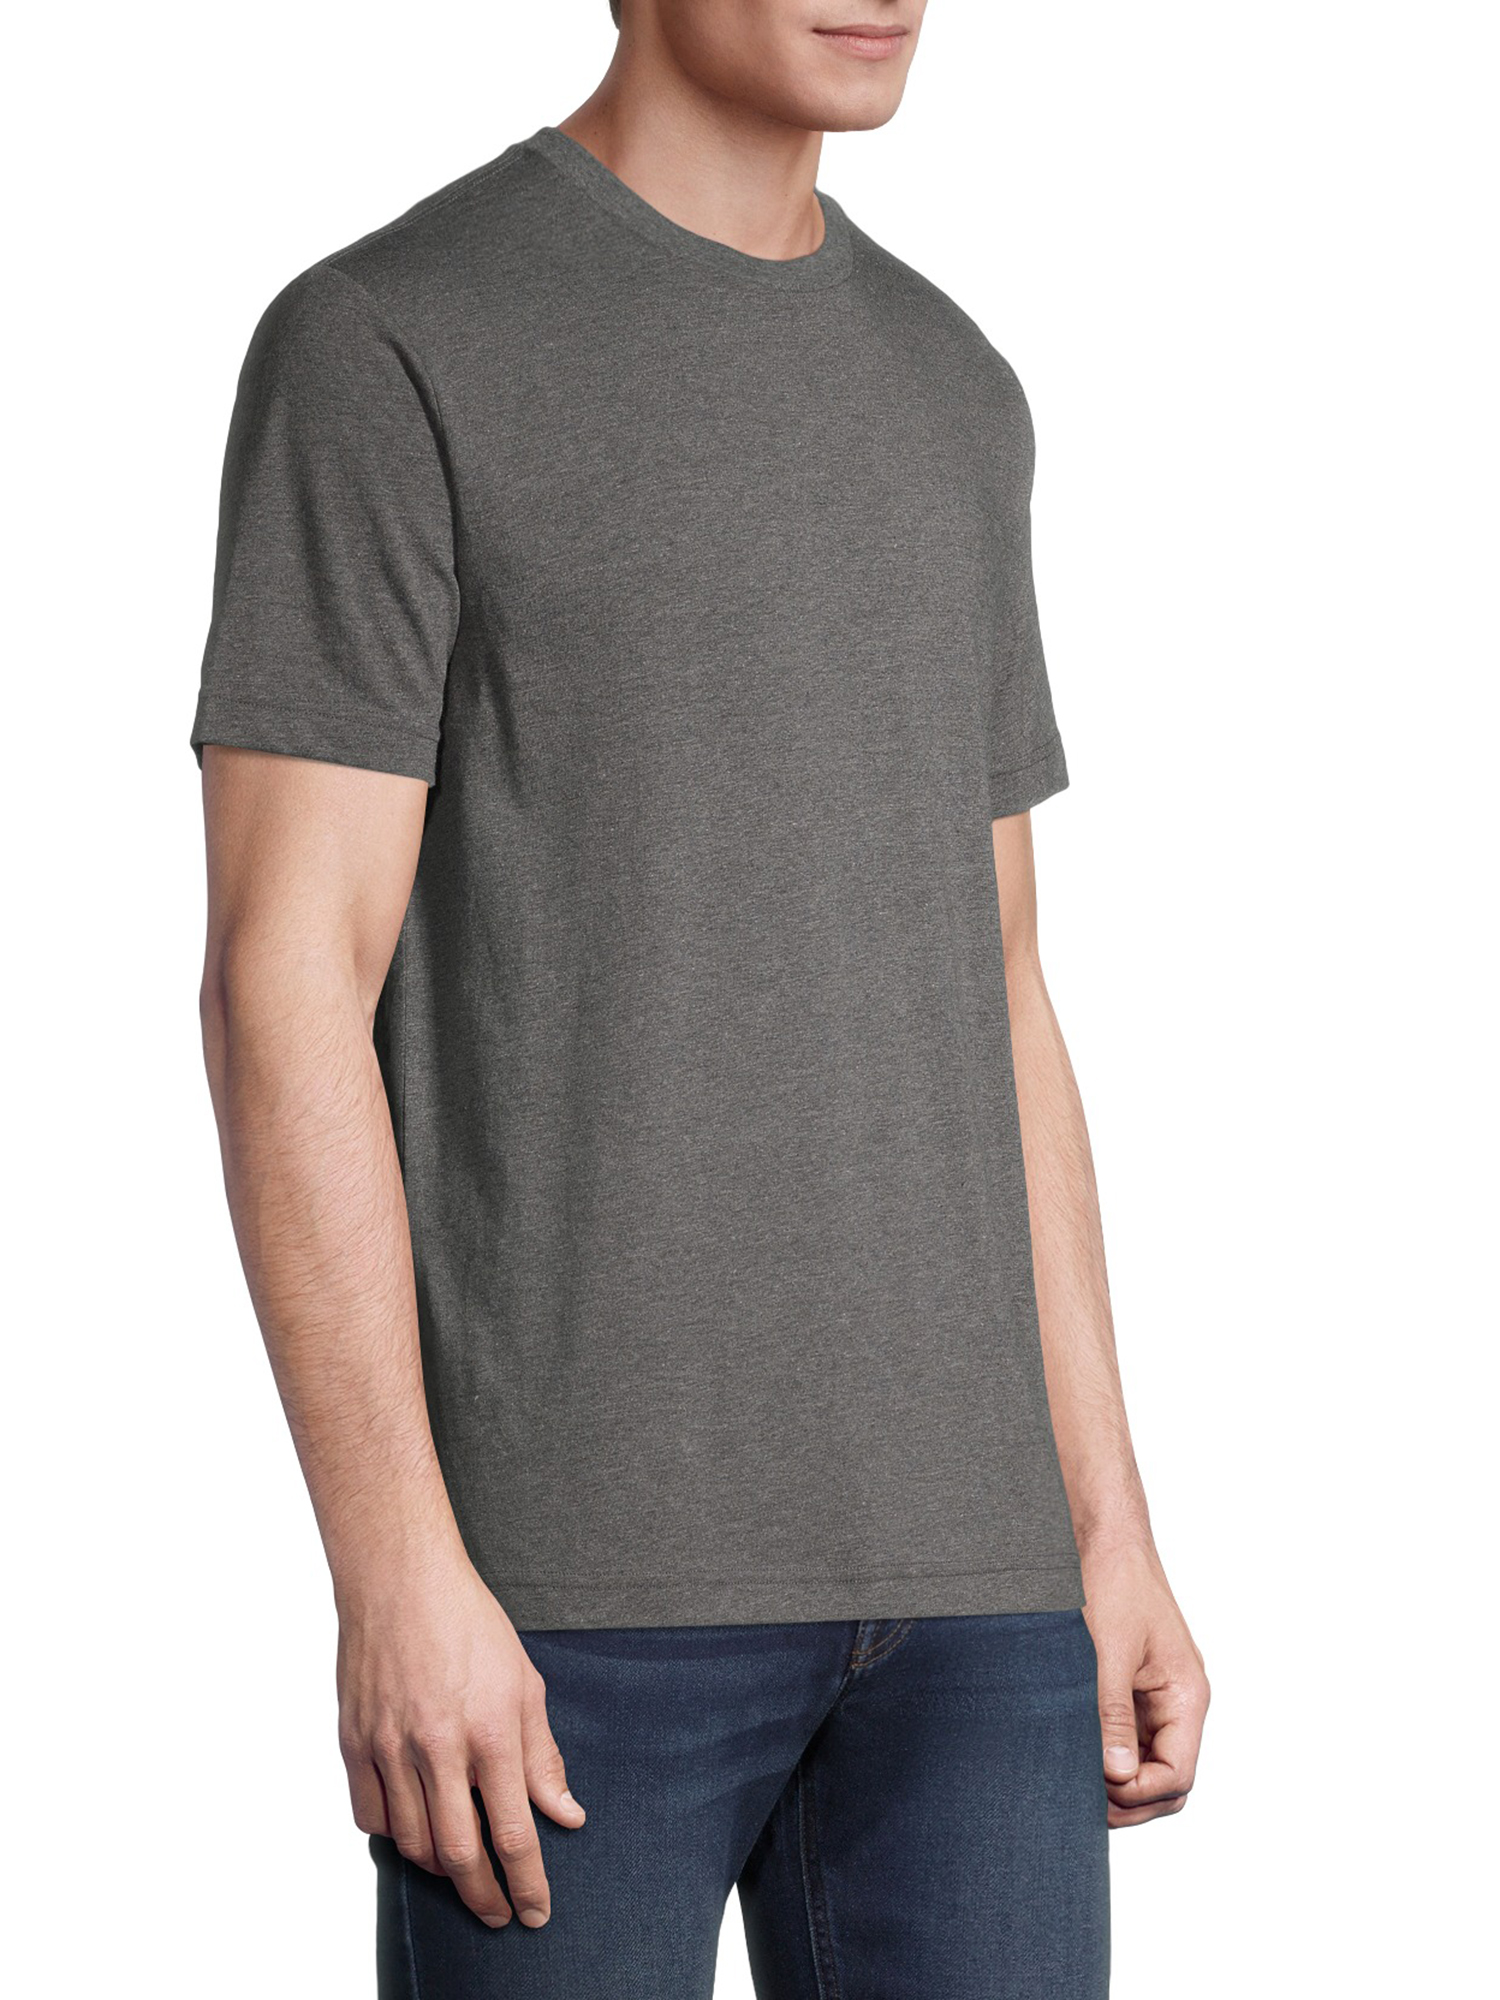 George Men's Short Sleeve Solid Crewneck T-Shirt, 3-Pack - image 2 of 4